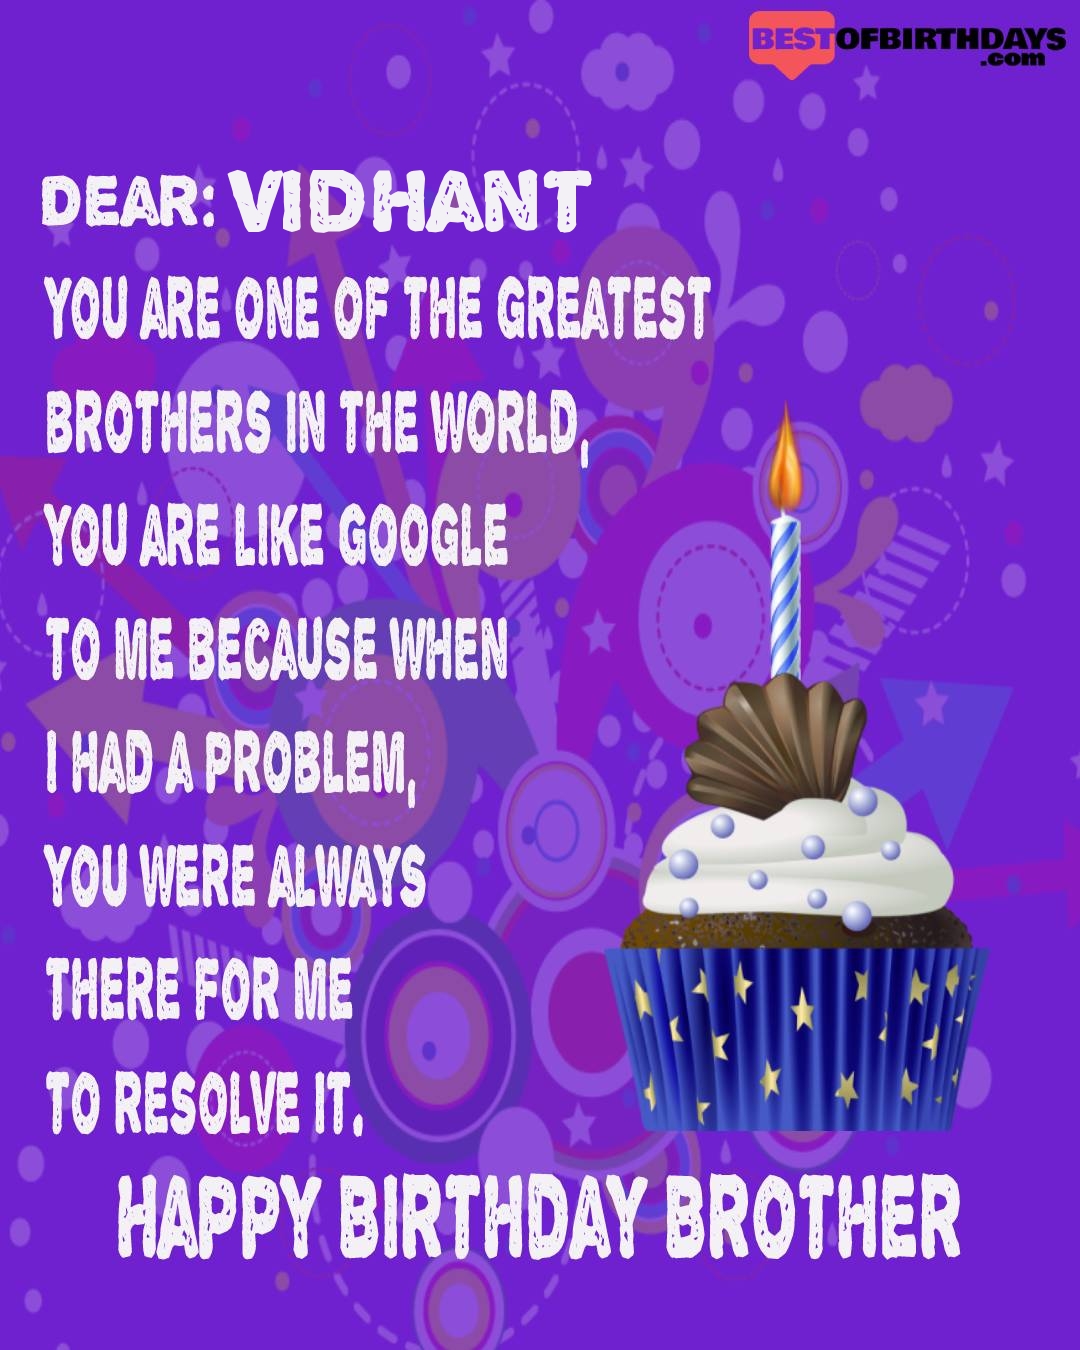 Happy birthday vidhant bhai brother bro